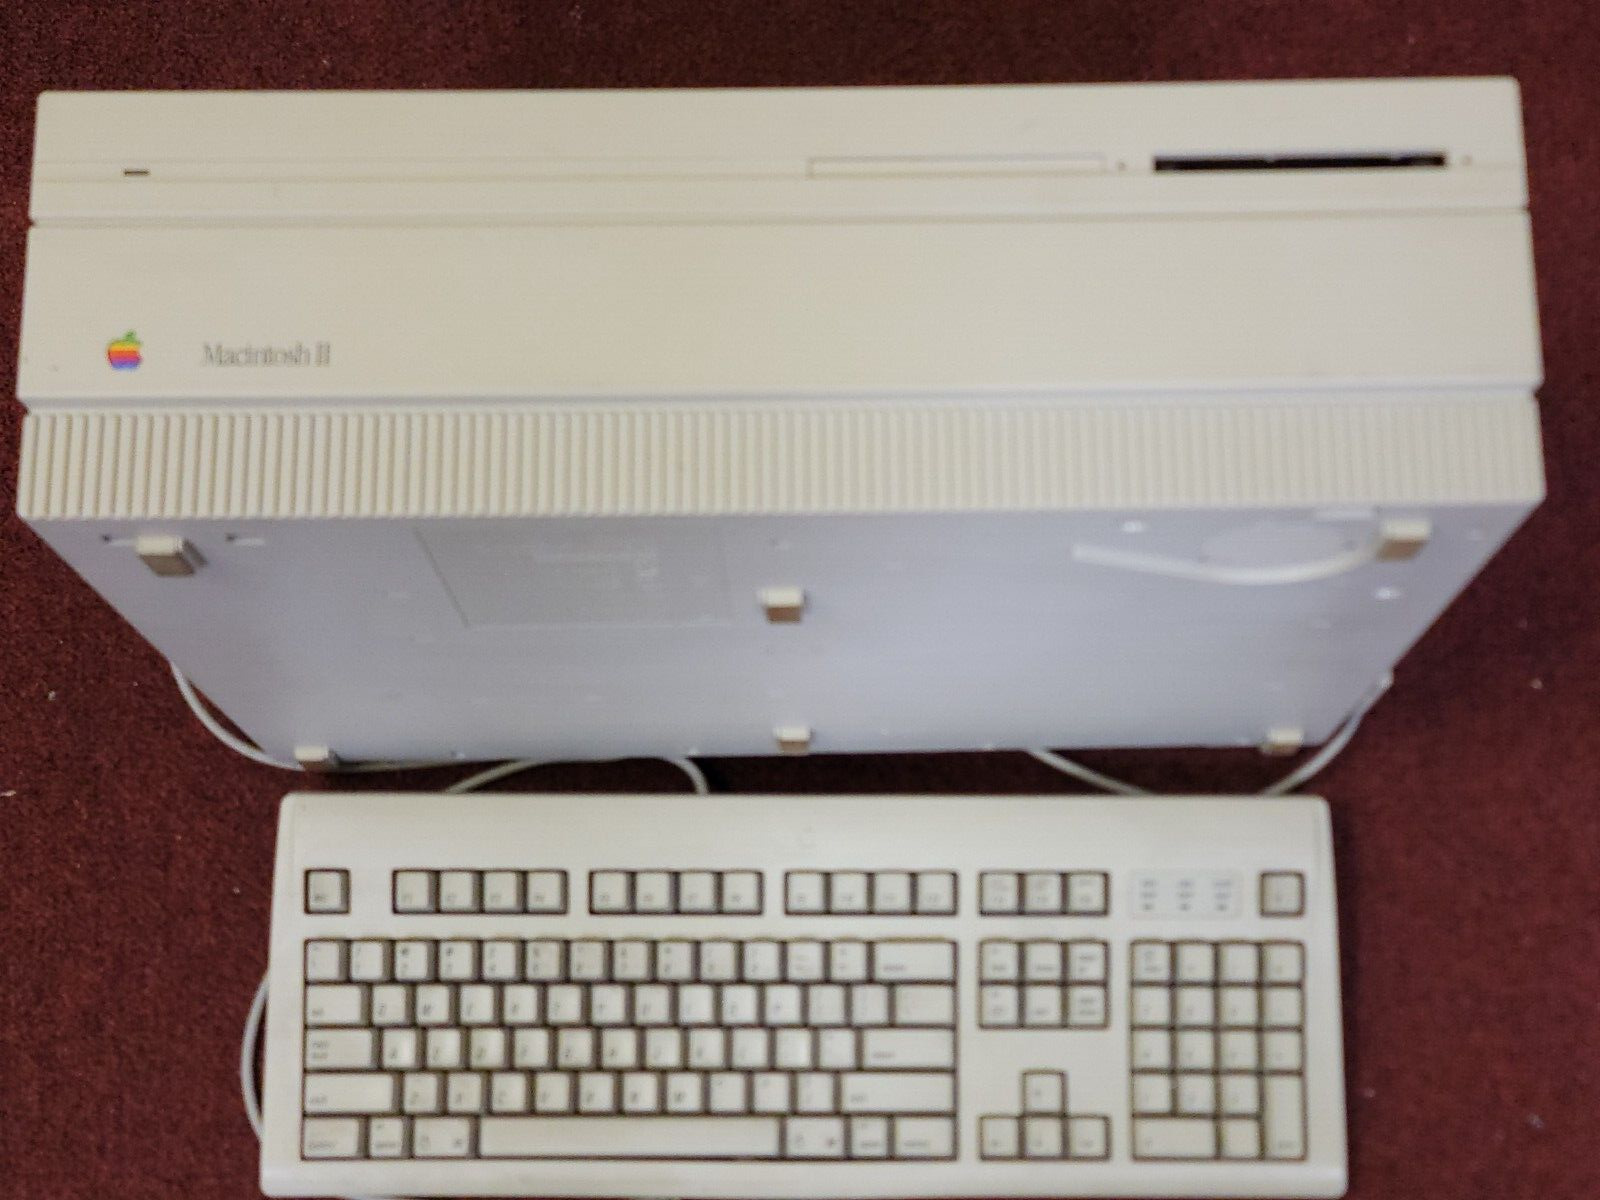 Apple Macintosh II M5000 Home computer, 8MB RAM 250MB HD OS 7.5  and keyboard